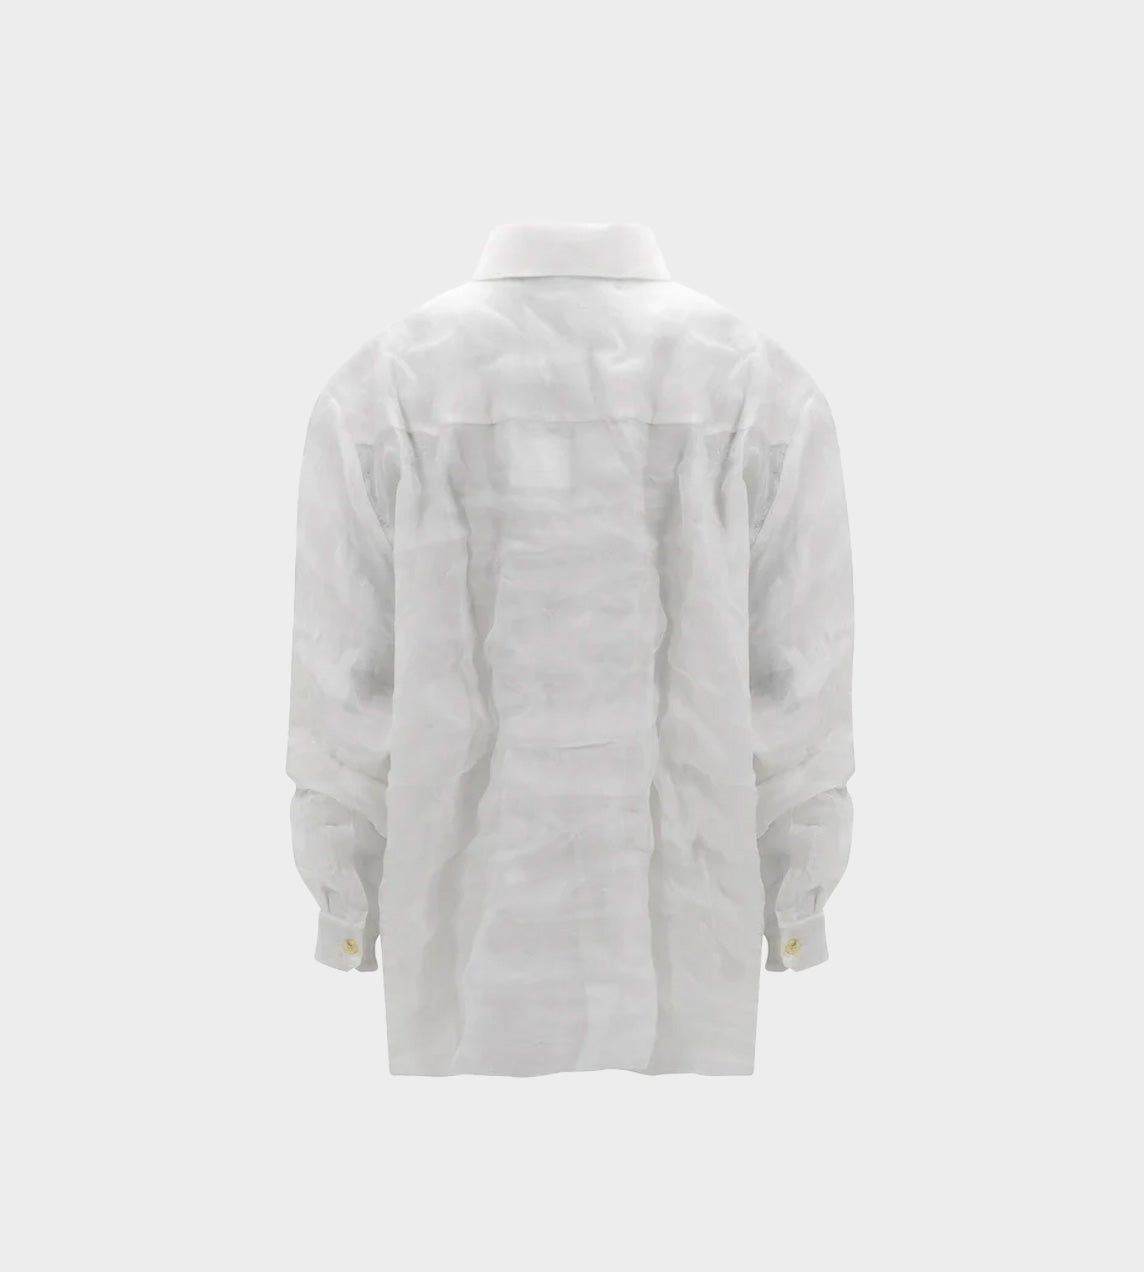 Yume Yume - Oversized Shirt White